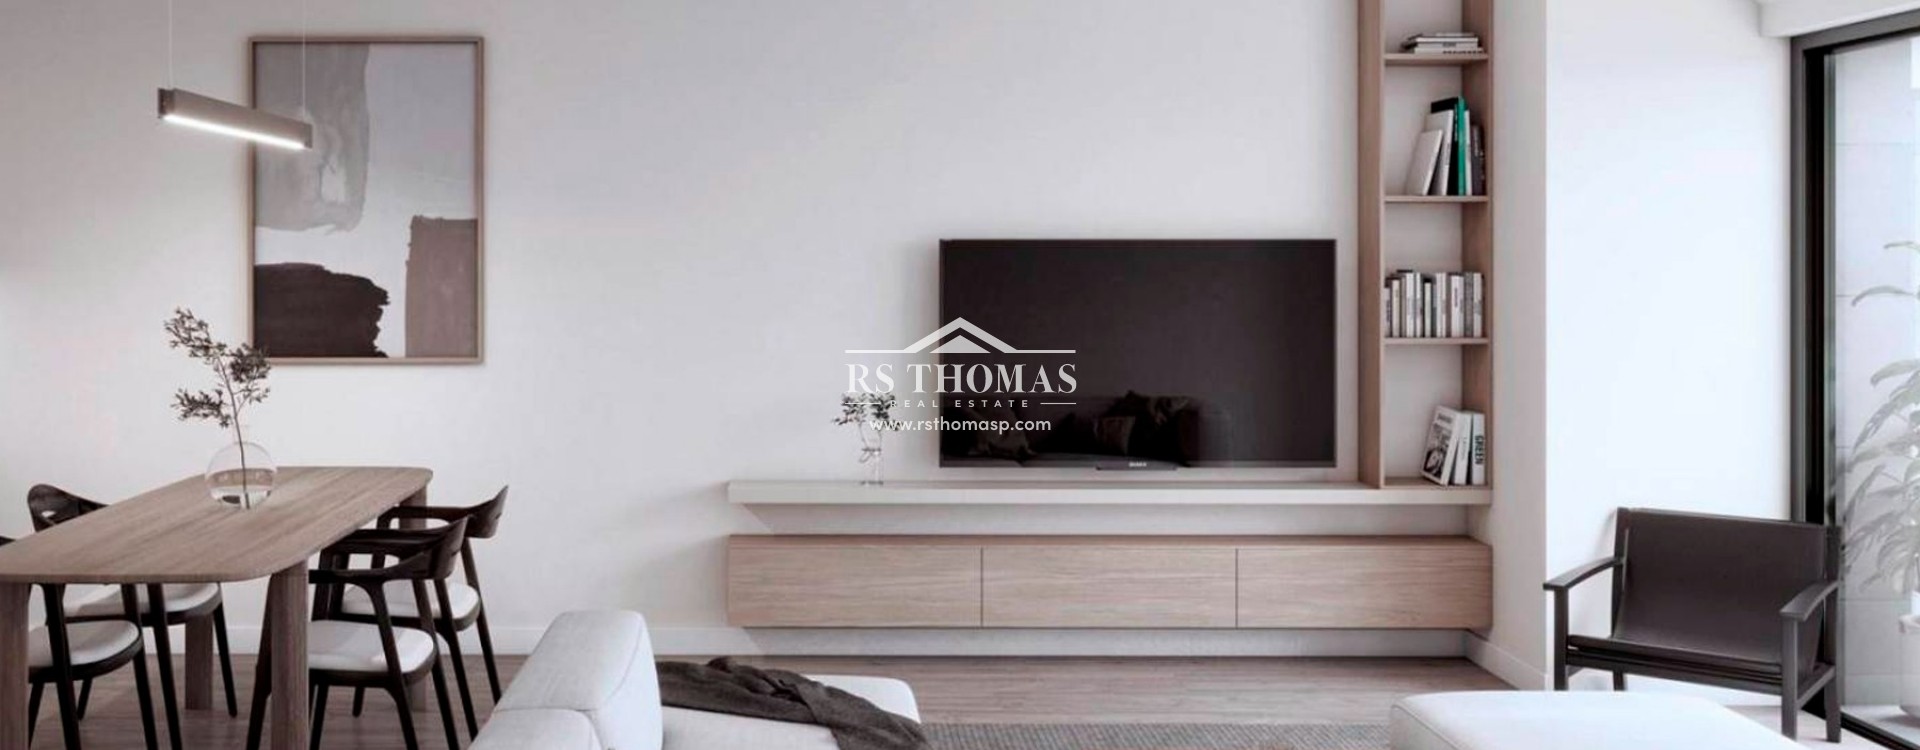 Exclusive penthouse for sale in Andorra la Vella